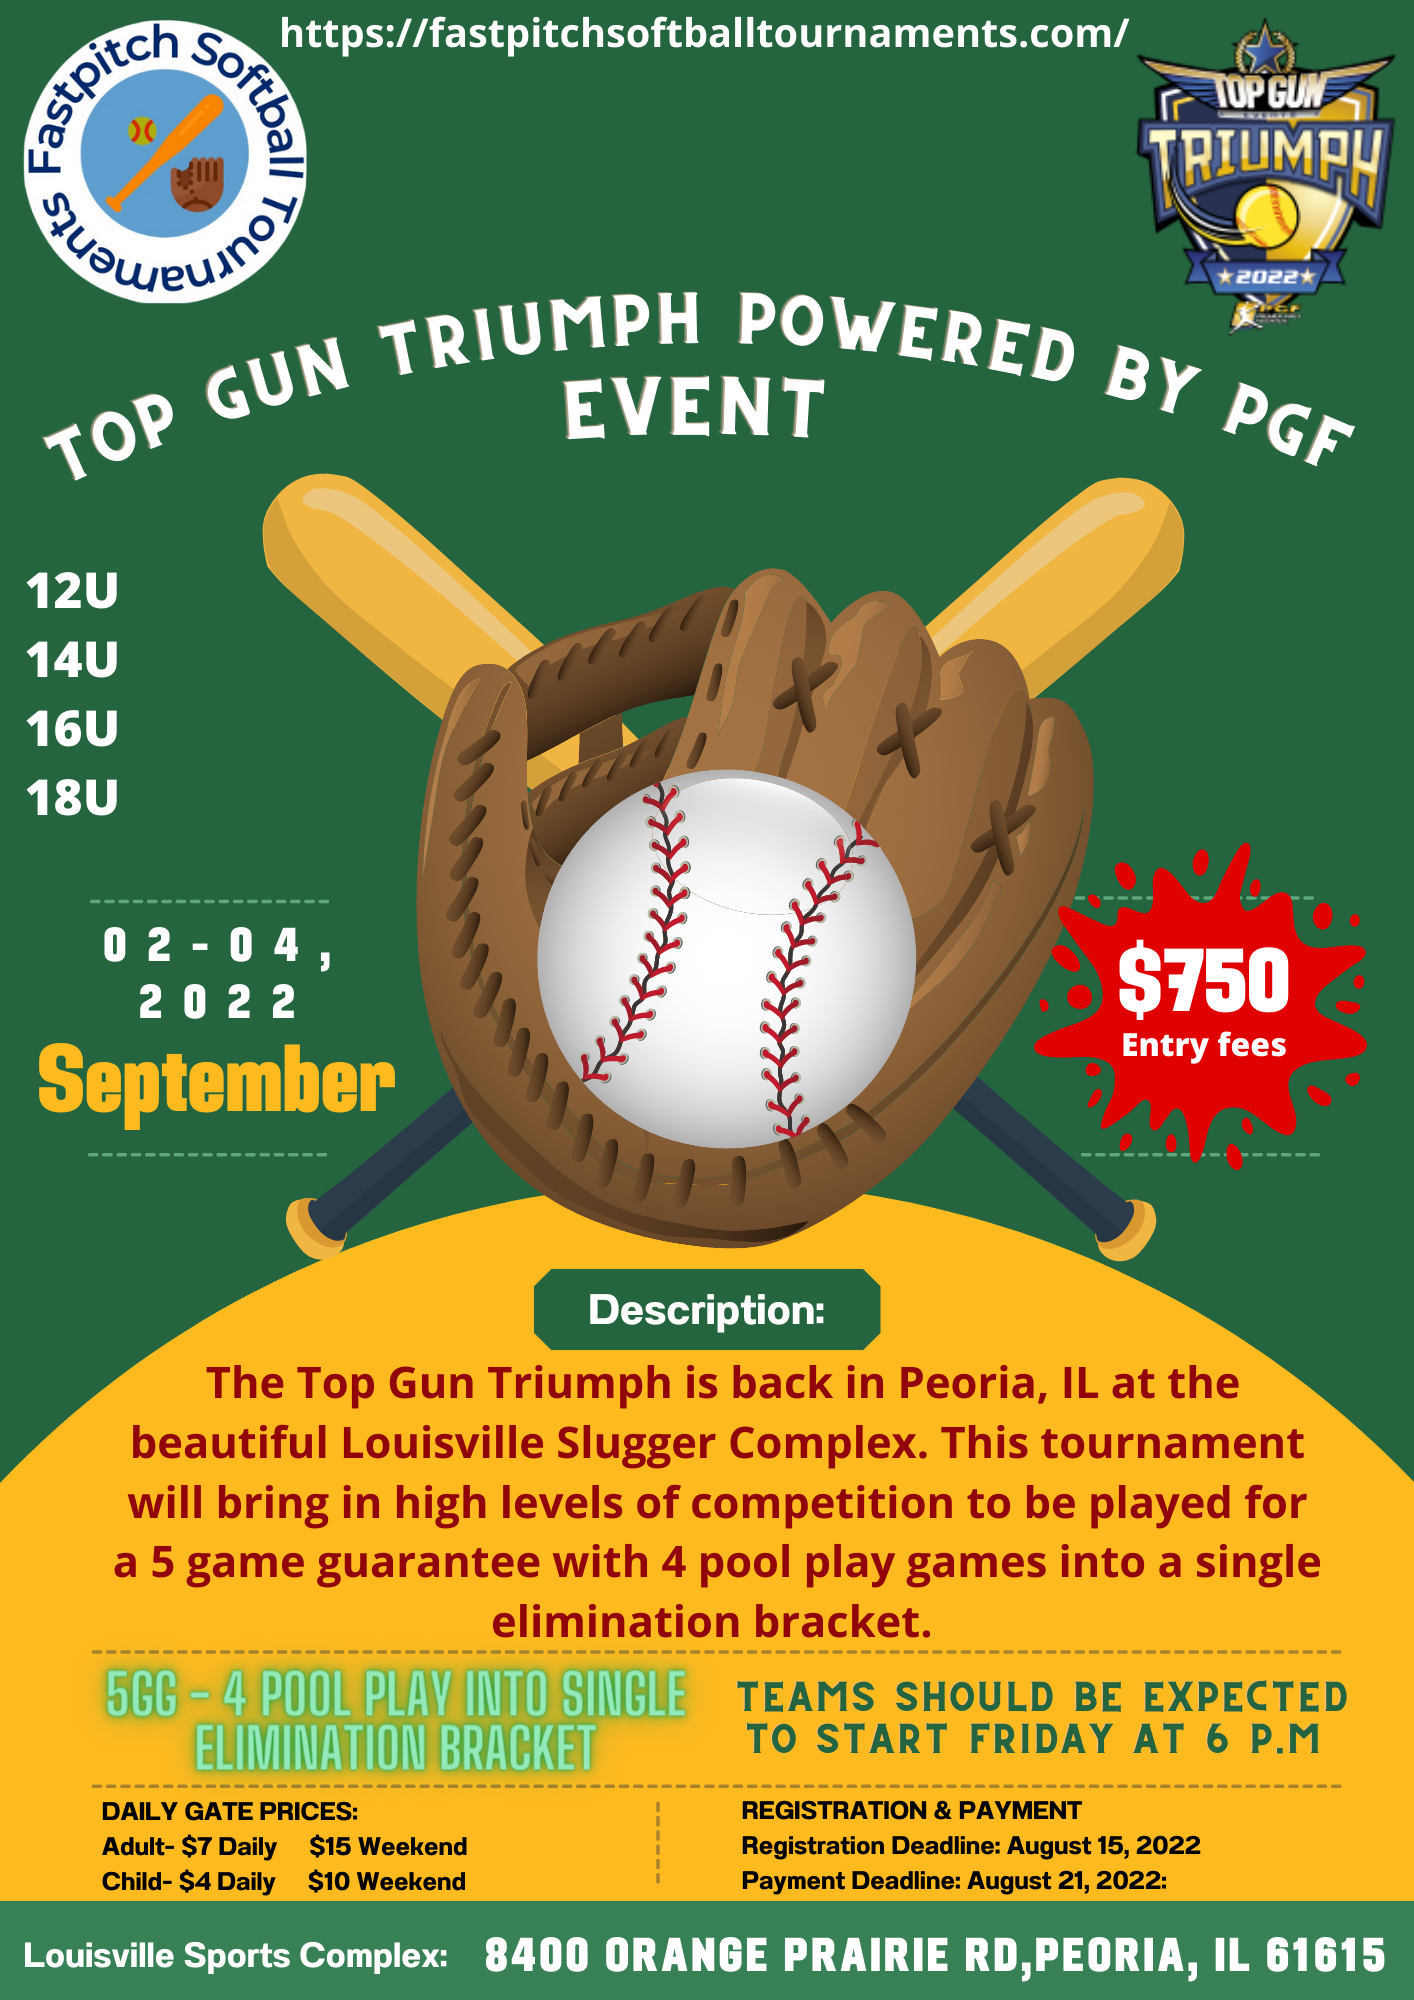 Top Gun Triumph powered by PGF Fastpitch Softball Tournaments